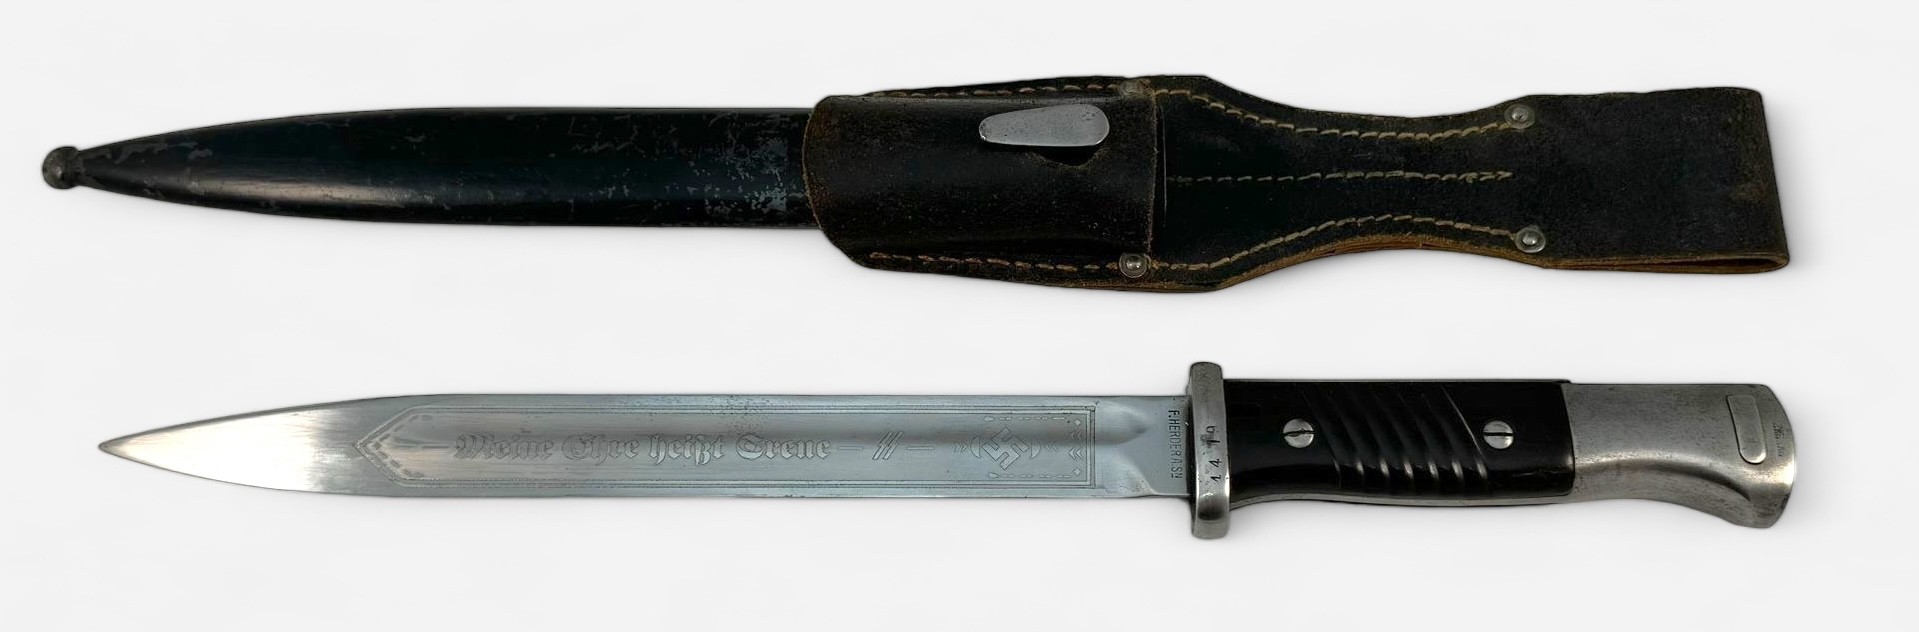 A WWII German Waffen SS bayonet, 25cm fullered blade, etched 'meine ehre heißt treue' (my honour